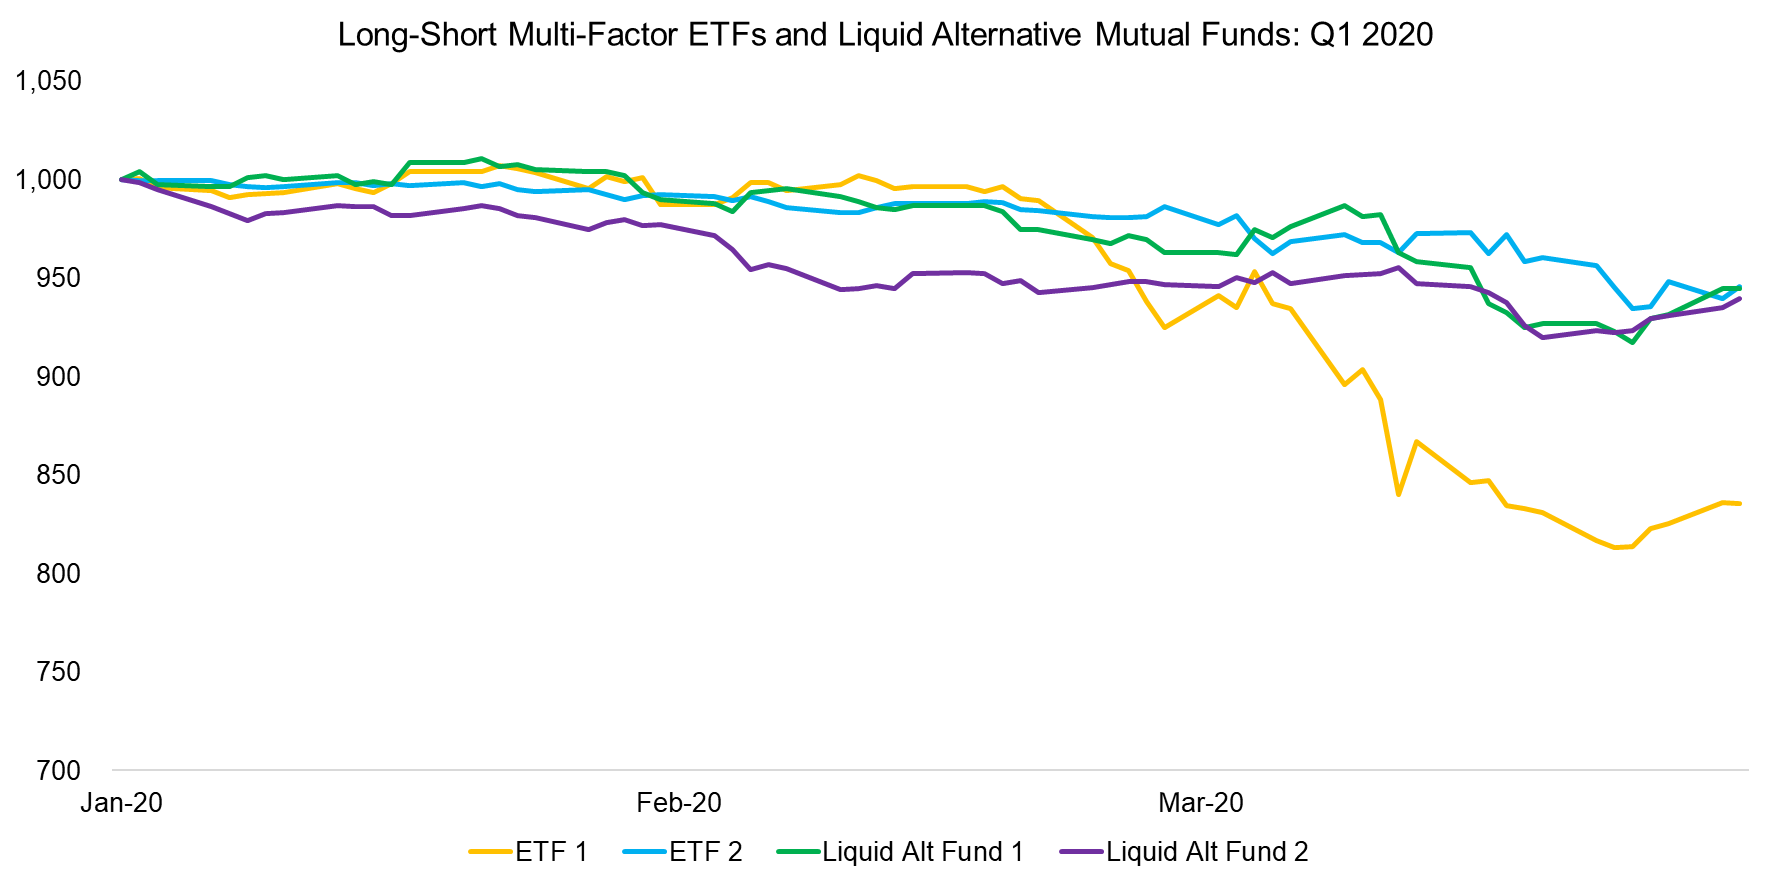 Long-Short Multi-Factor ETFs and Liquid Alternative Mutual Funds Q1 2020